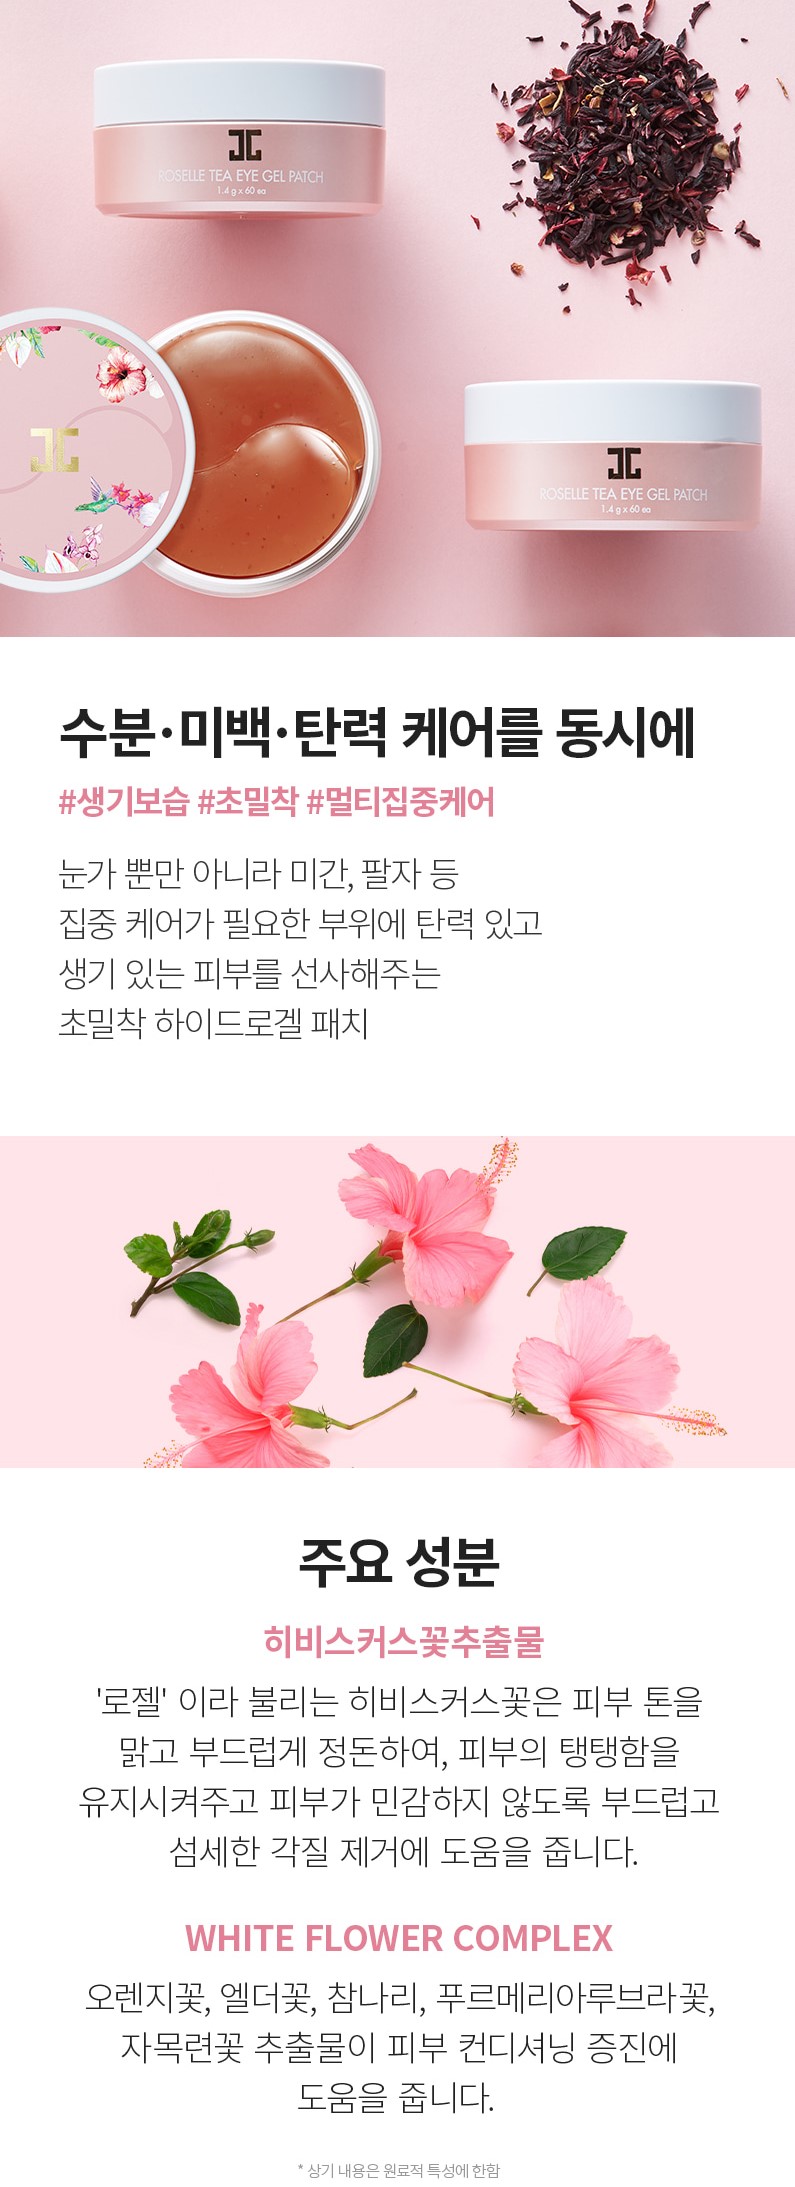 韓國食品-(Special Offer!) [Jayjun] Roselle Tea Eye Gel Patch 1.4g*60ea (30pairs)